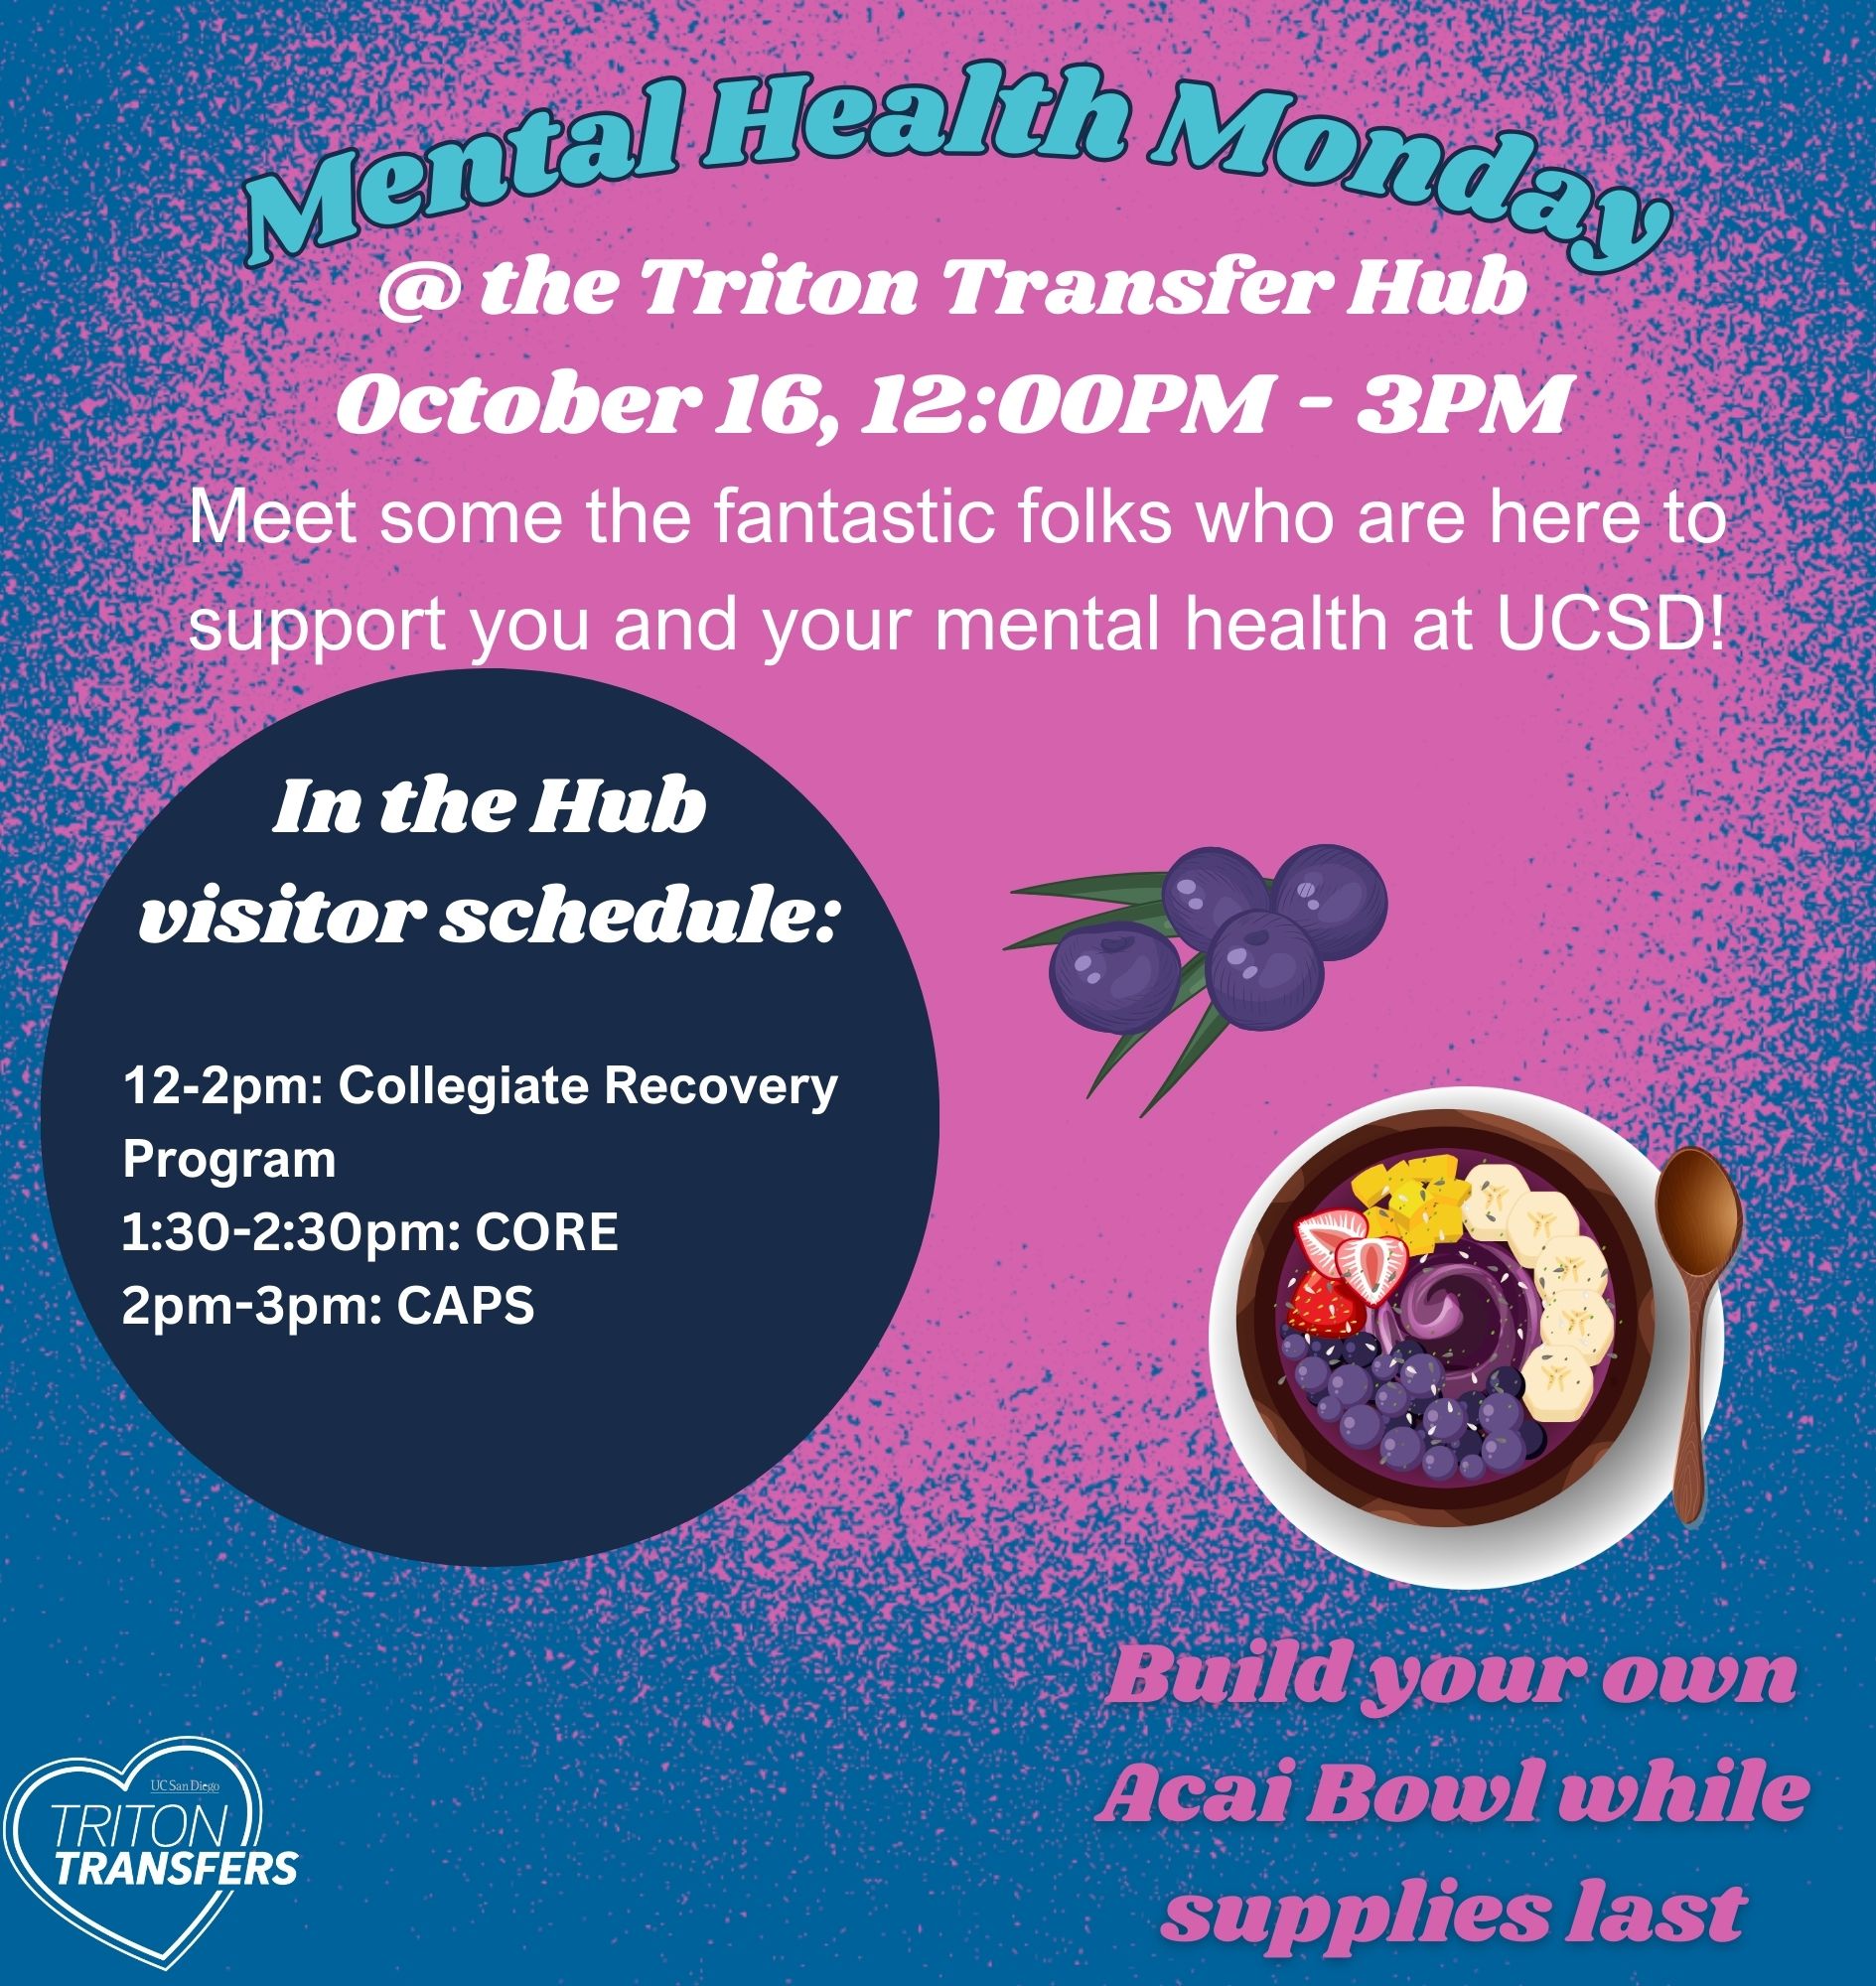 NTSW-Mental-Health-Monday-2.jpg